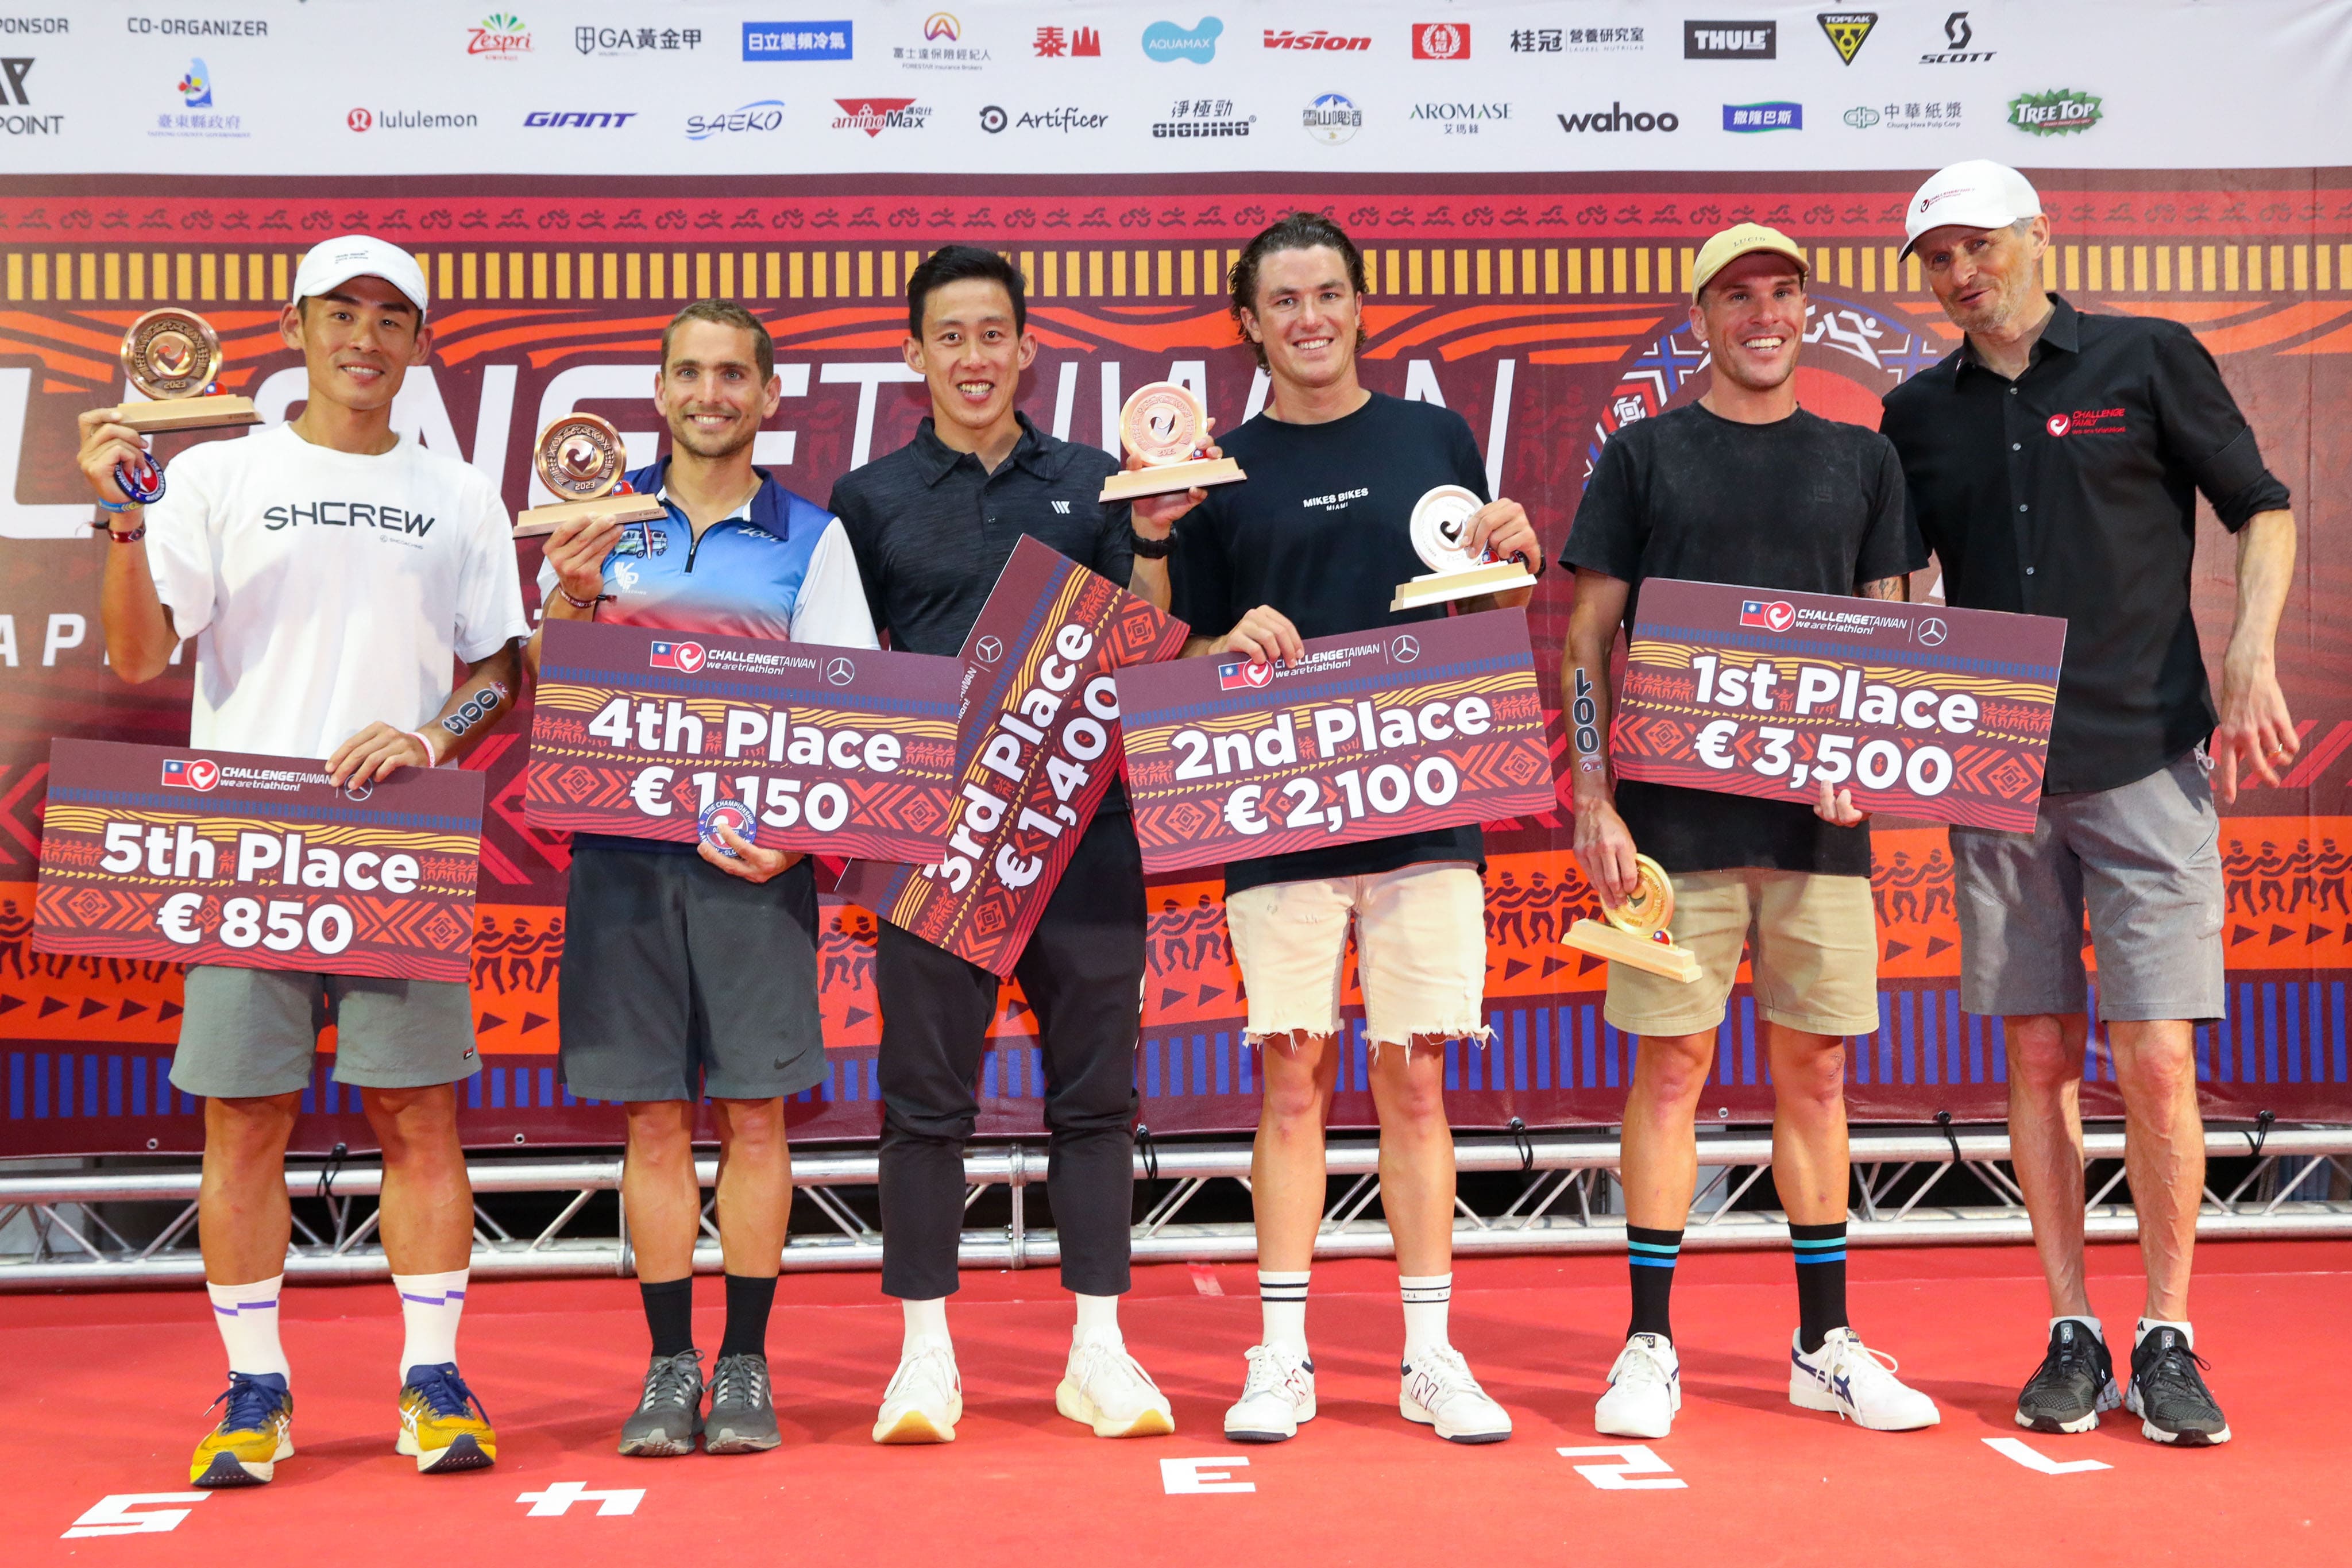 113km職業男子組前五名頒獎。照片提供CHALLENGE TAIWAN